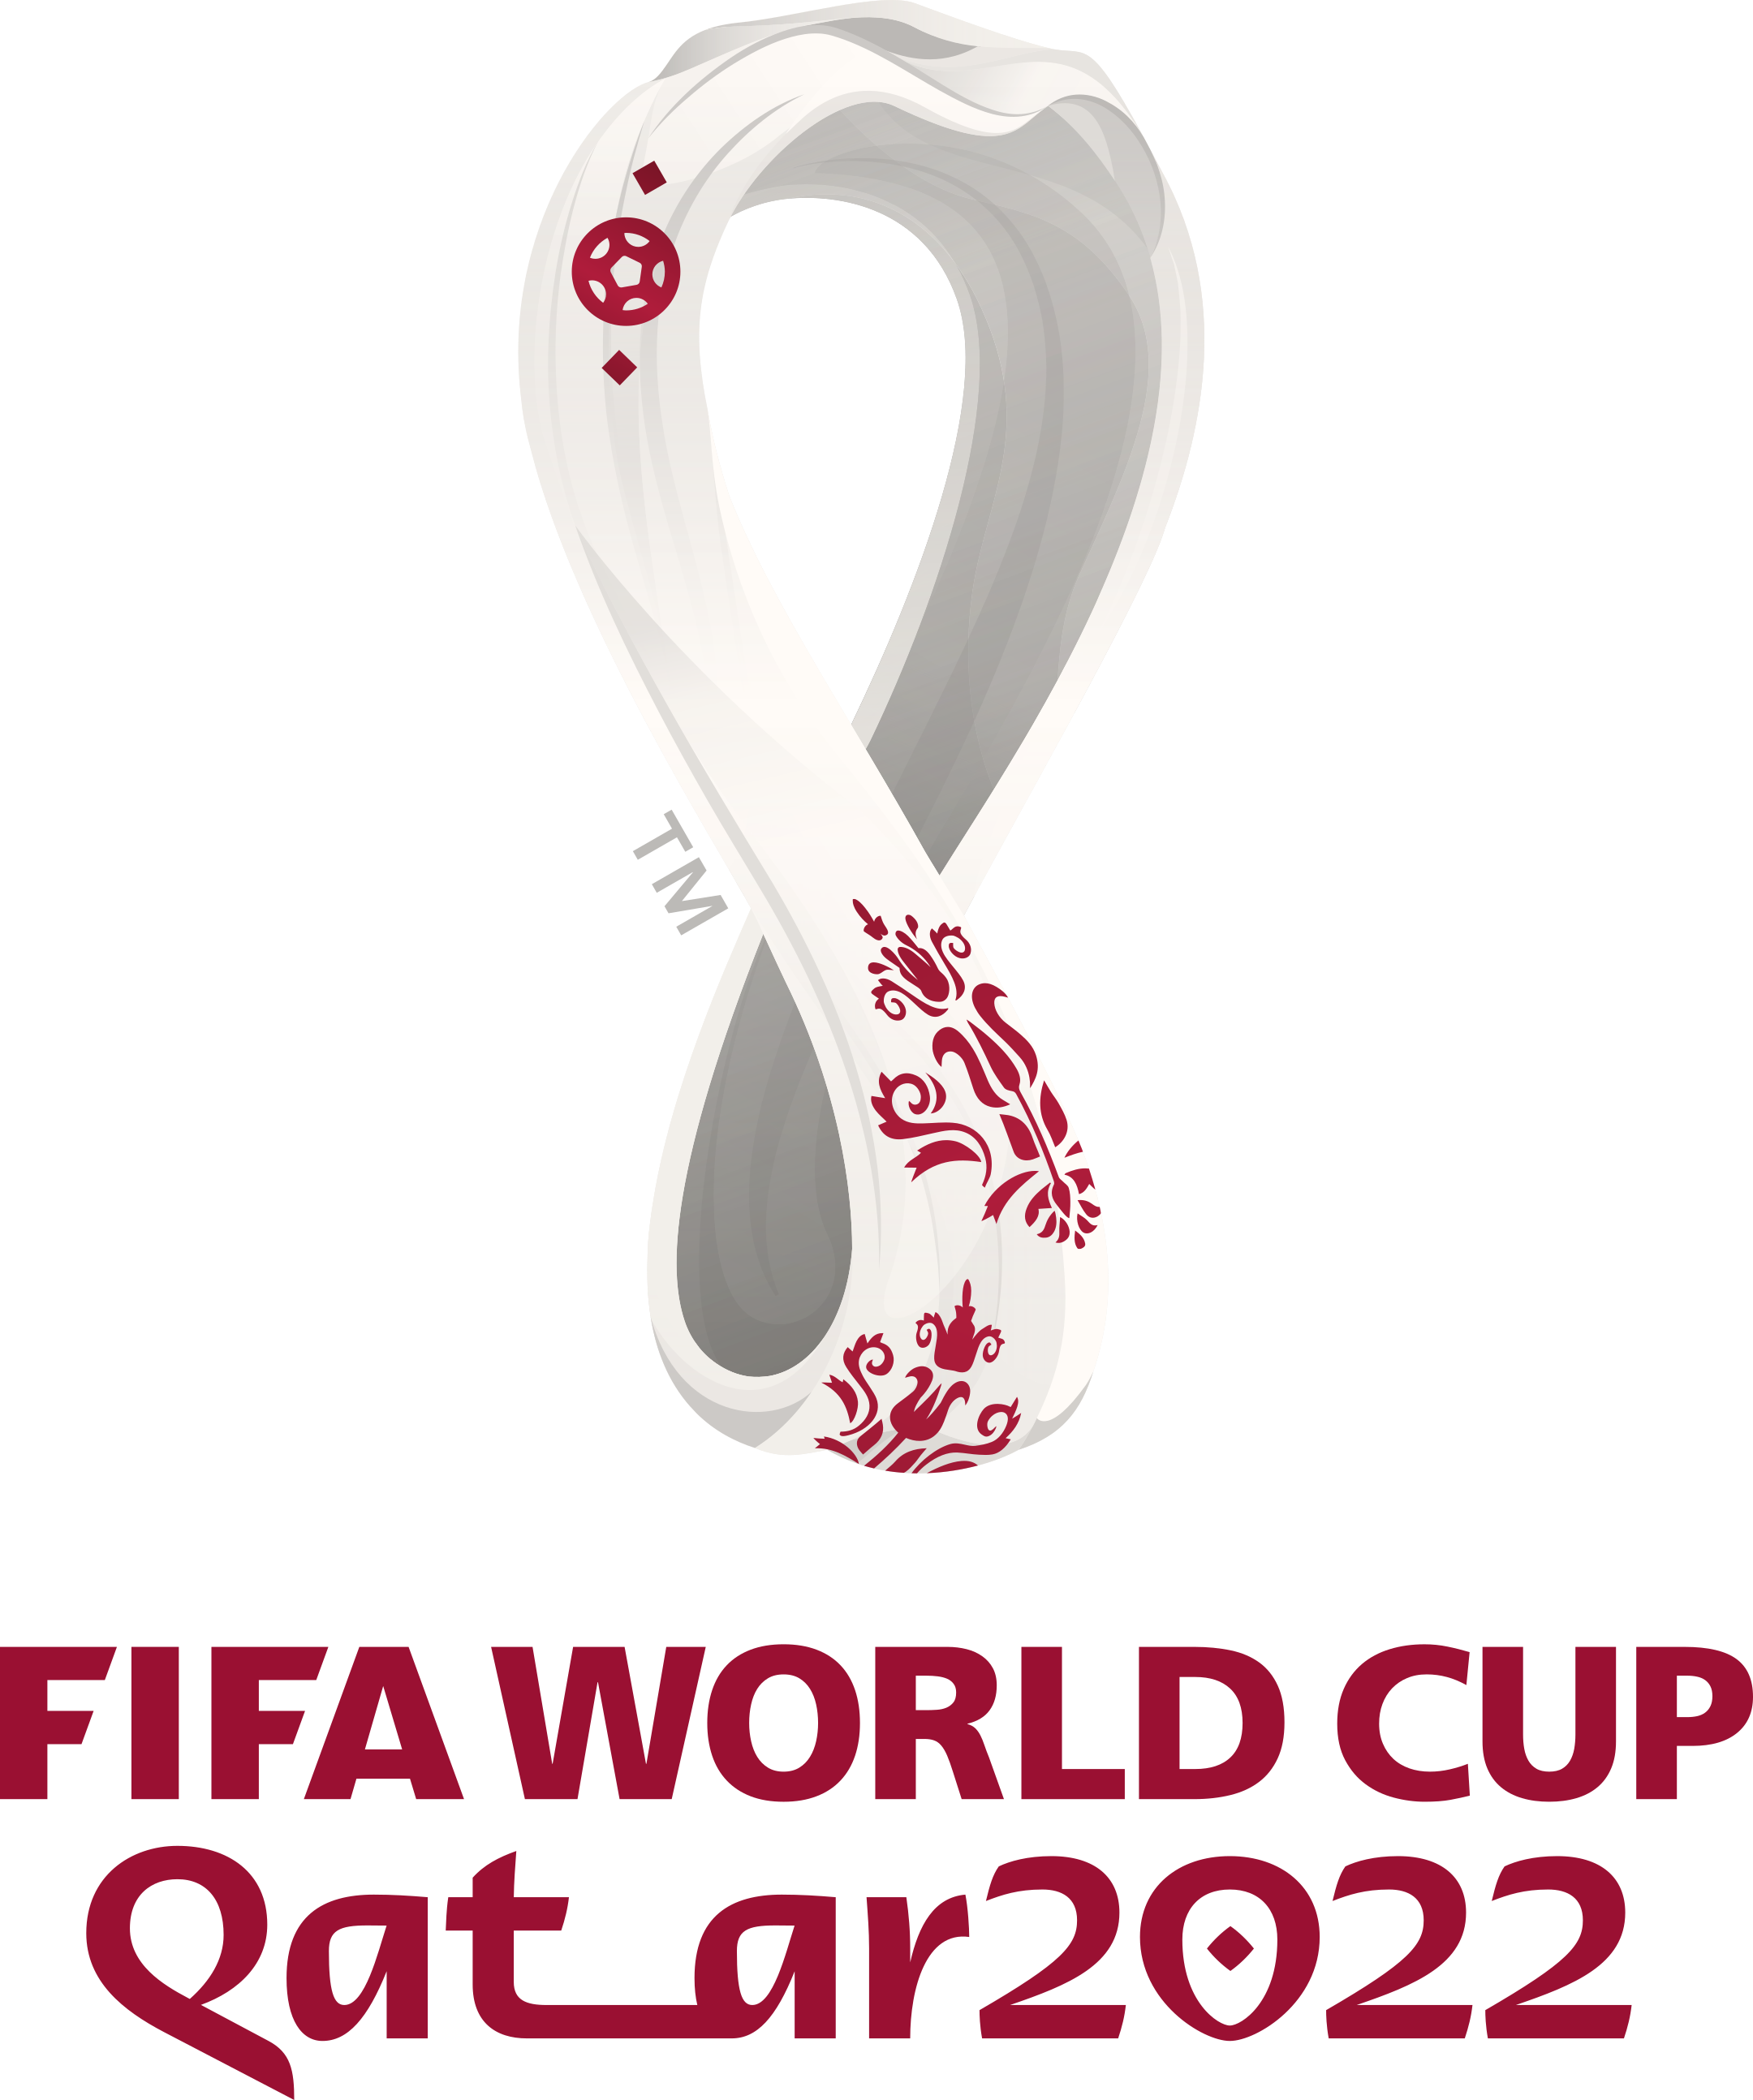 world cup 2022 logo 1 - World Cup Qatar 2022 Logo